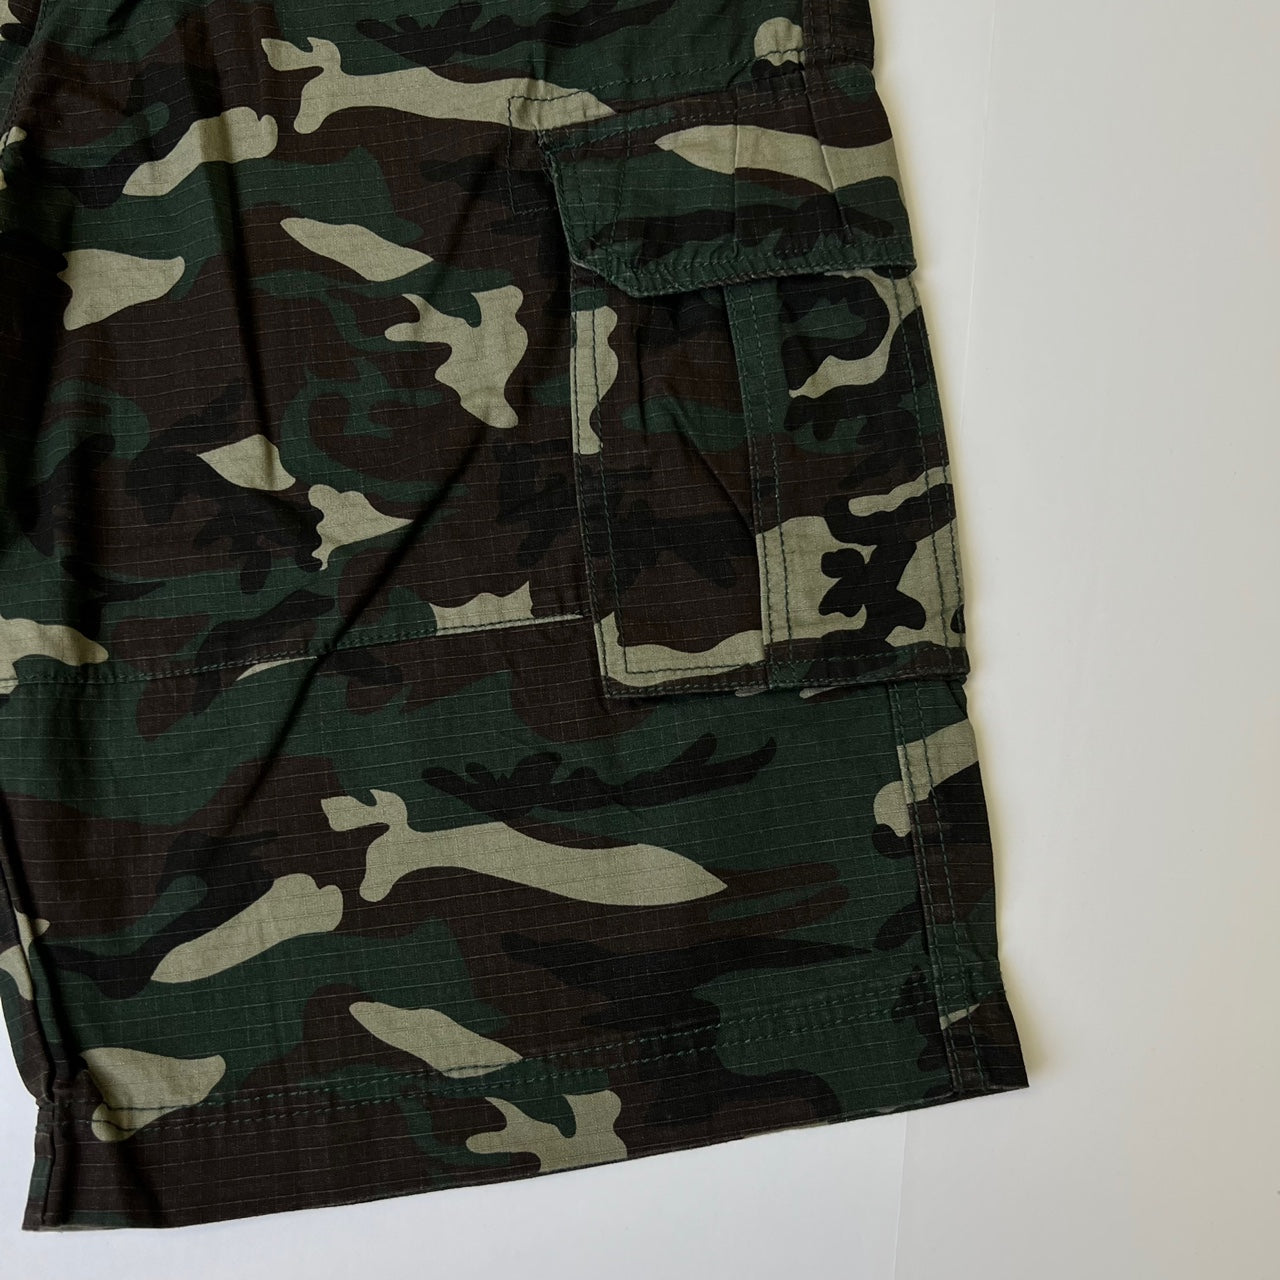 Camo Green Military Cargo Shorts with Pockets